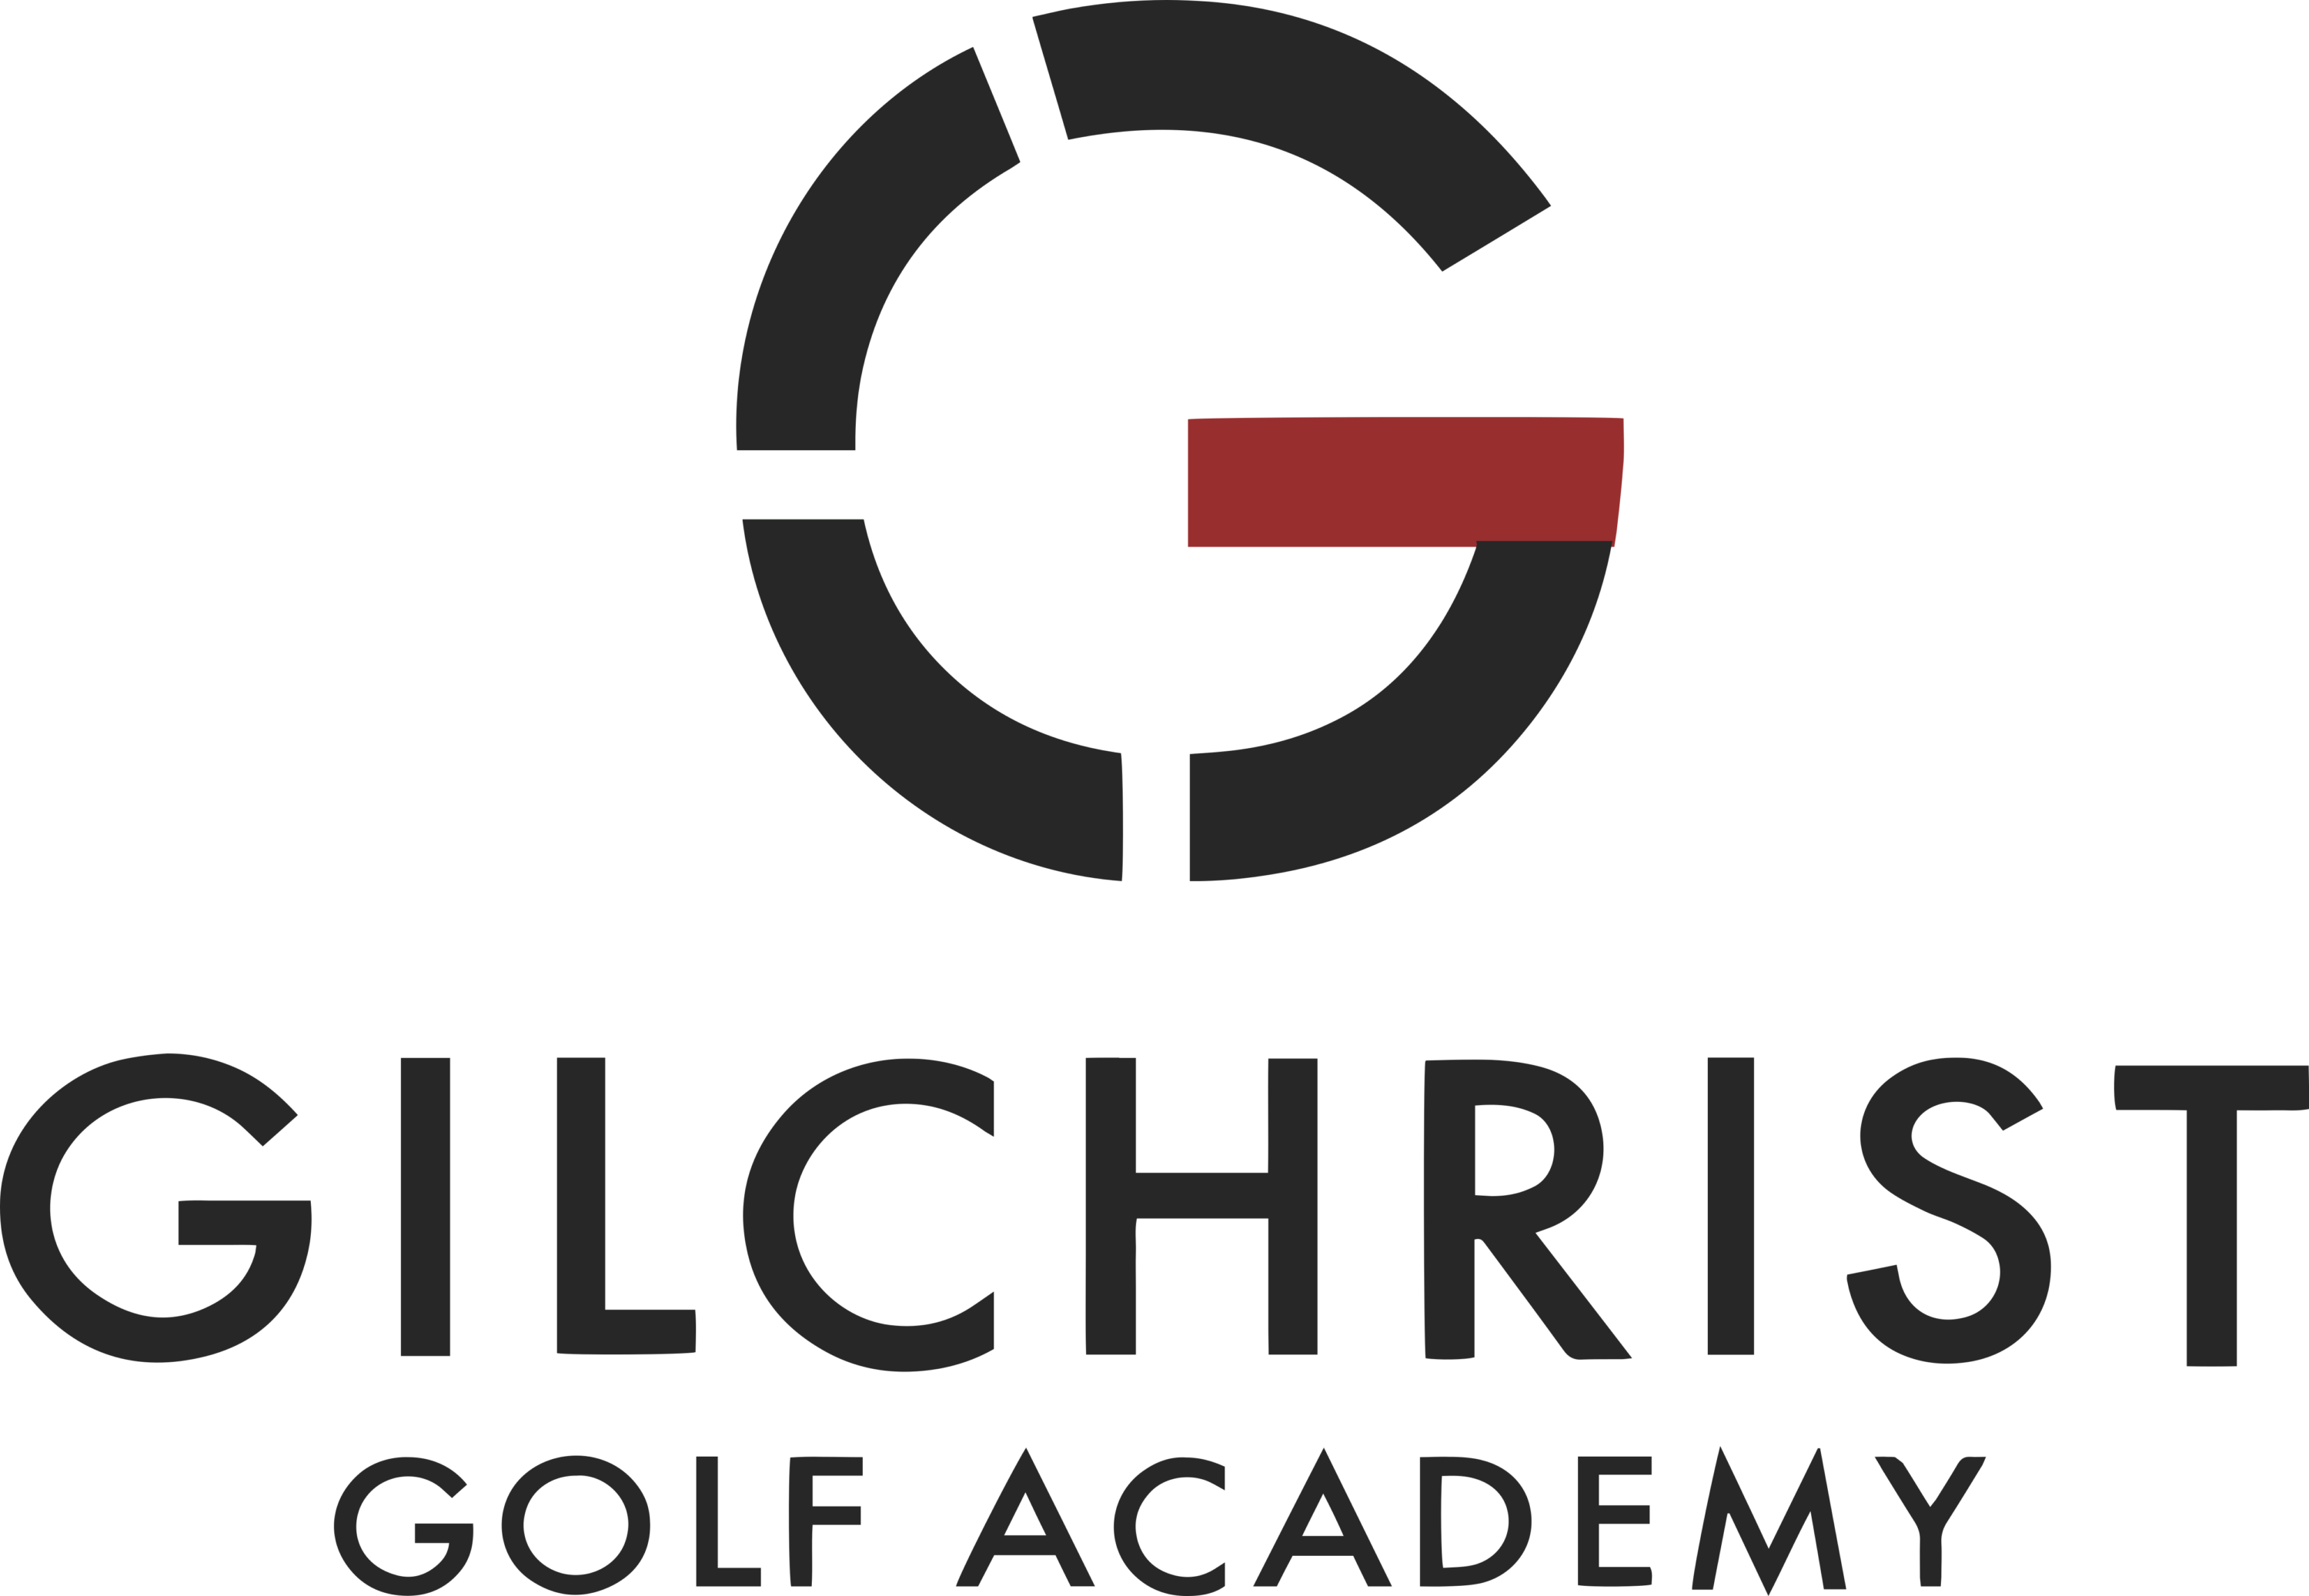 Gary Gilchrist Golf Academy Logo